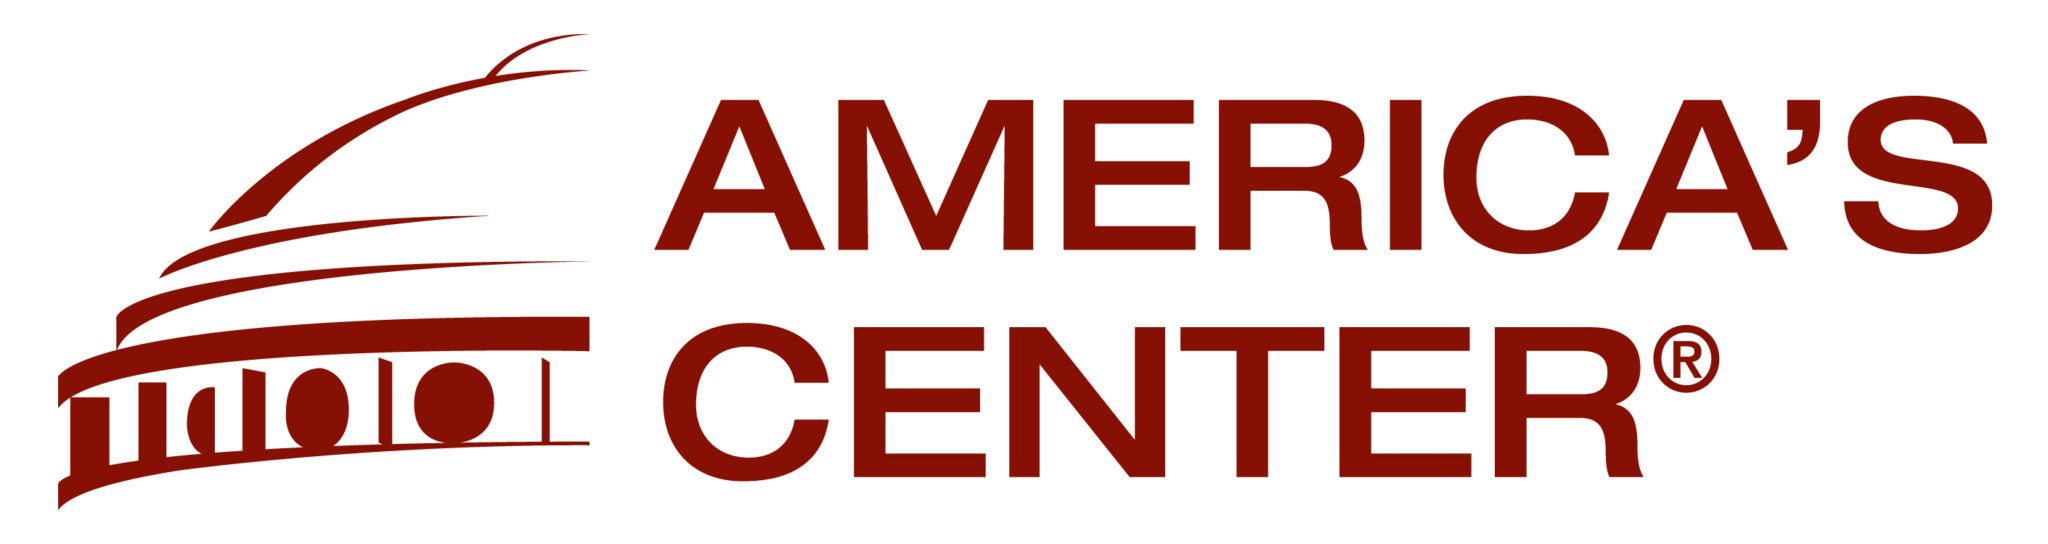 America's Center